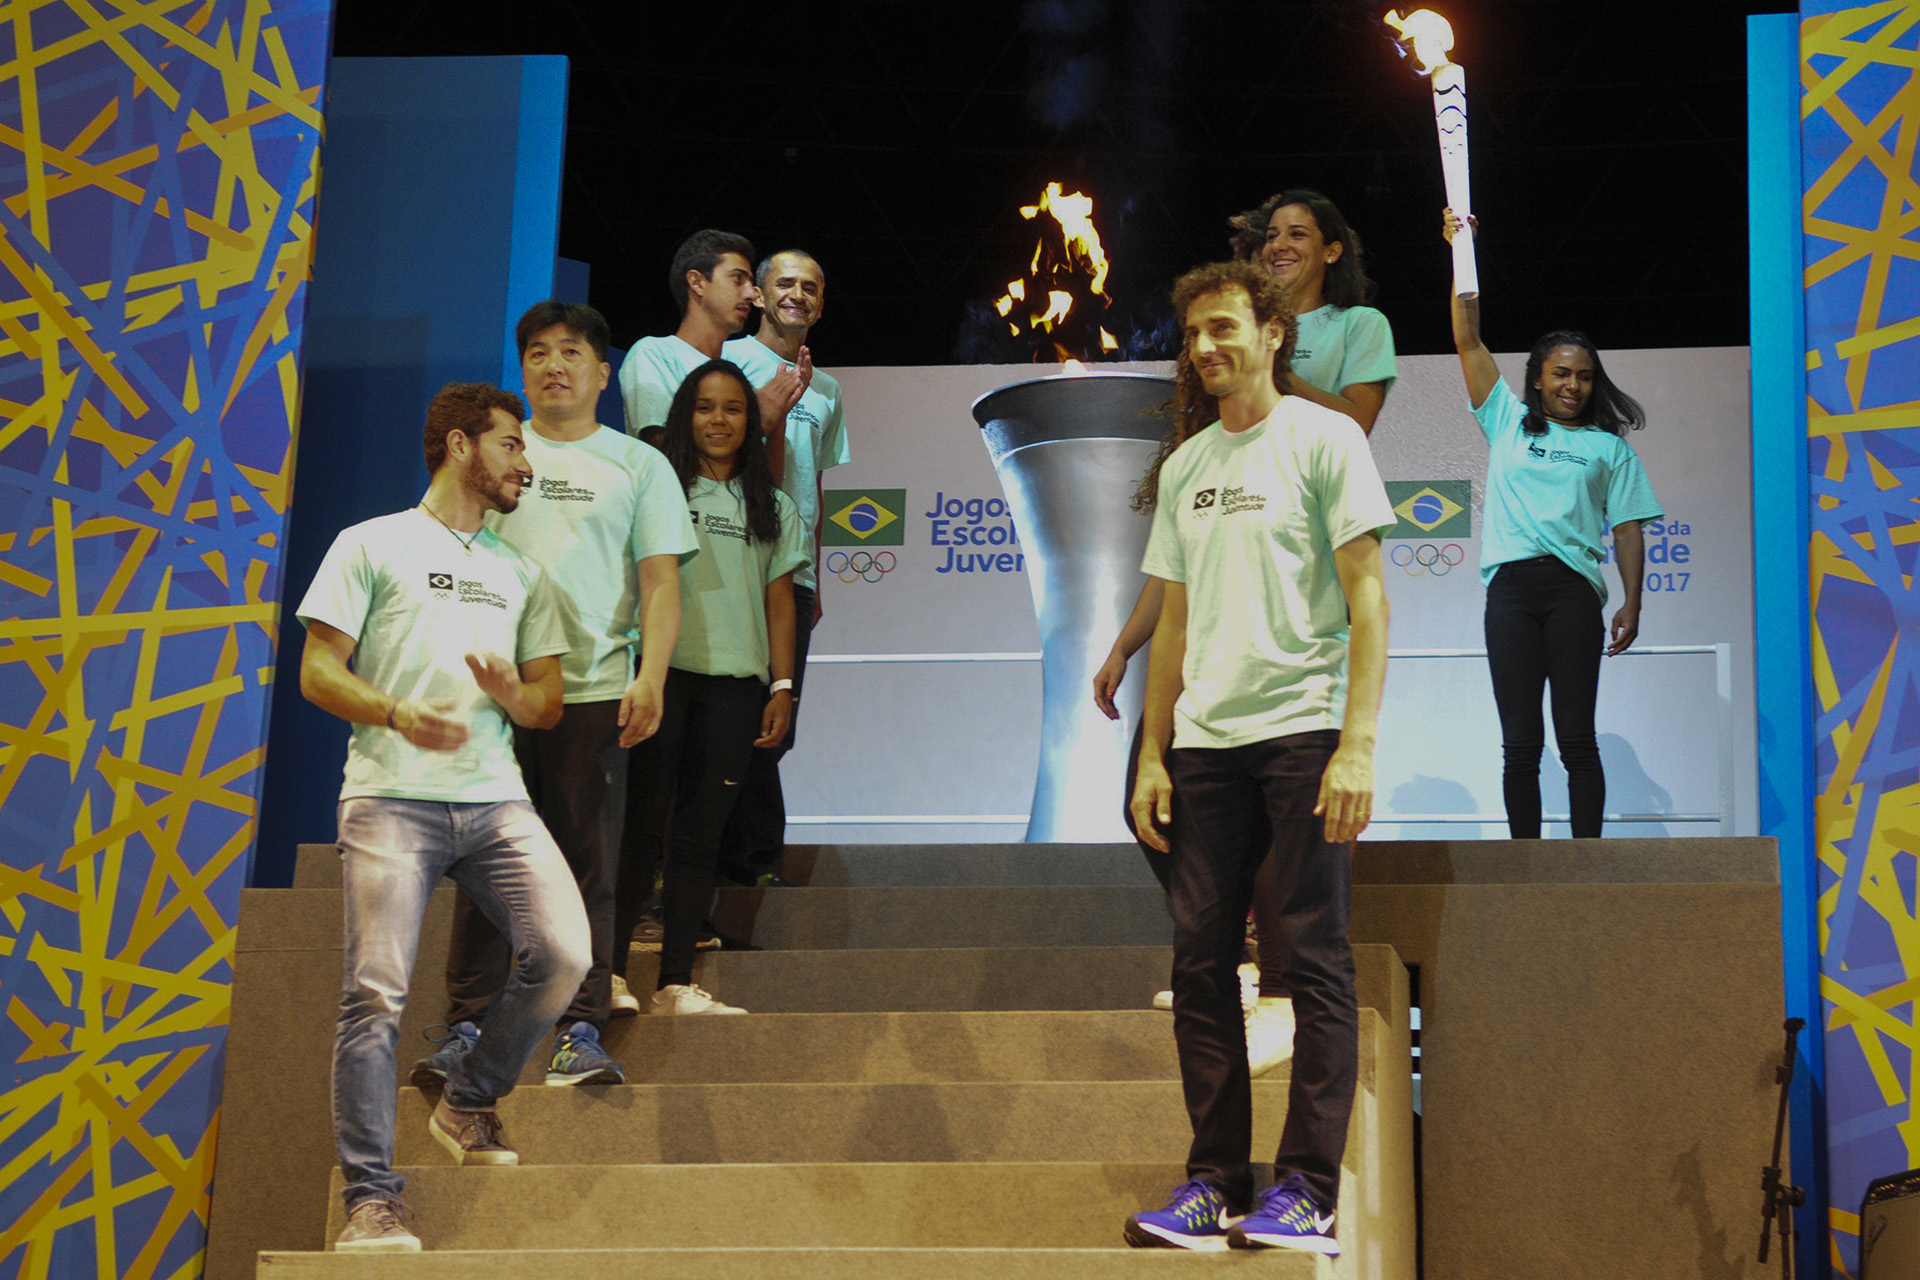 Dez atletas embaixadores conduziram a tocha olímpica na abertura dos Jogos Escolares da Juventude. A pira foi acesa pela judoca Érika. Foto: Renato Araújo/Agência Brasília